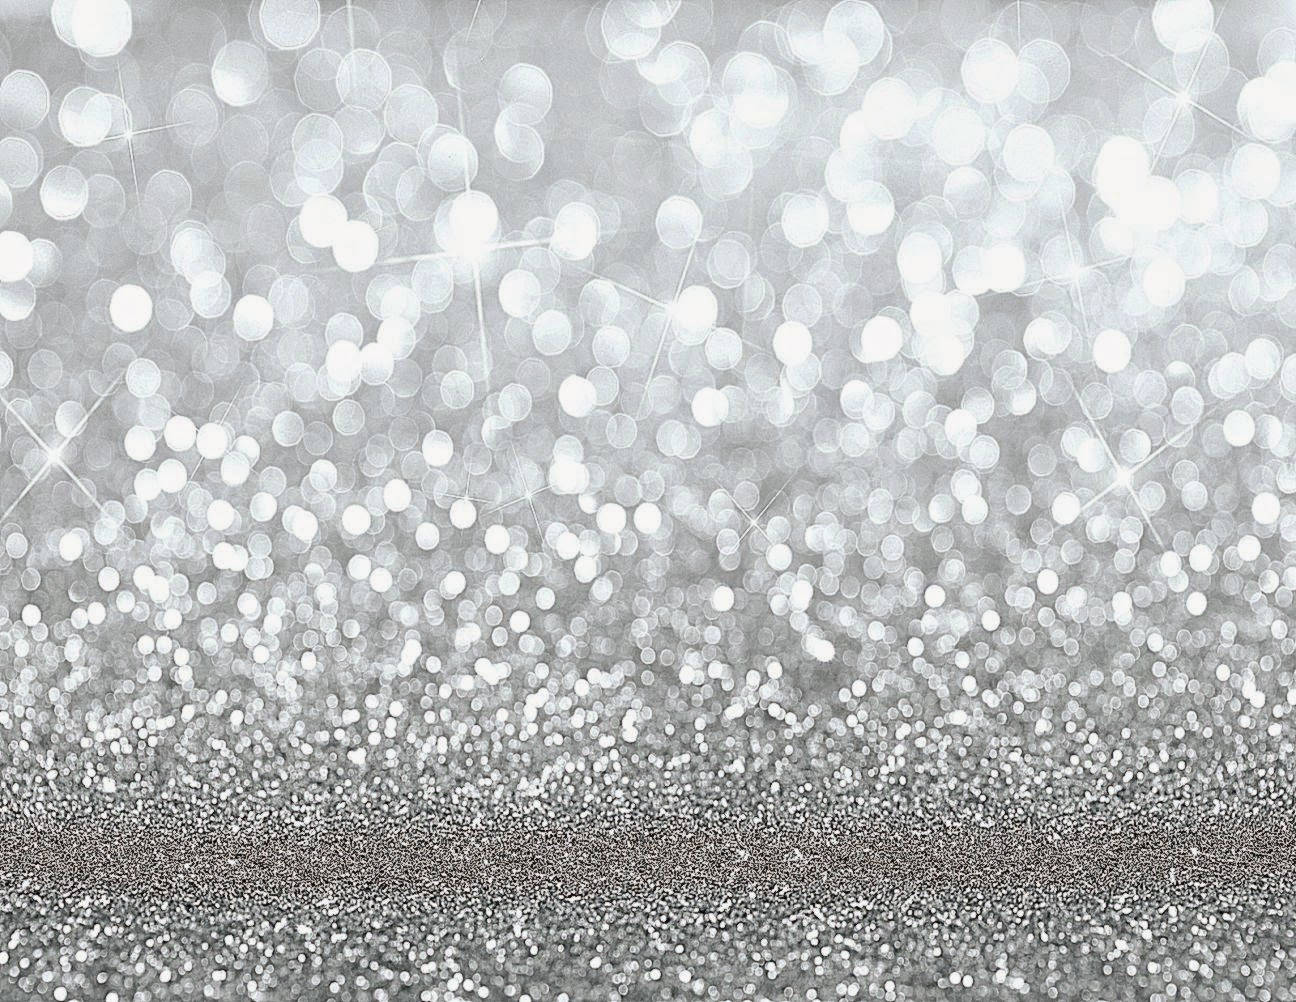 Autofokusglittrande Silverglitter. Wallpaper